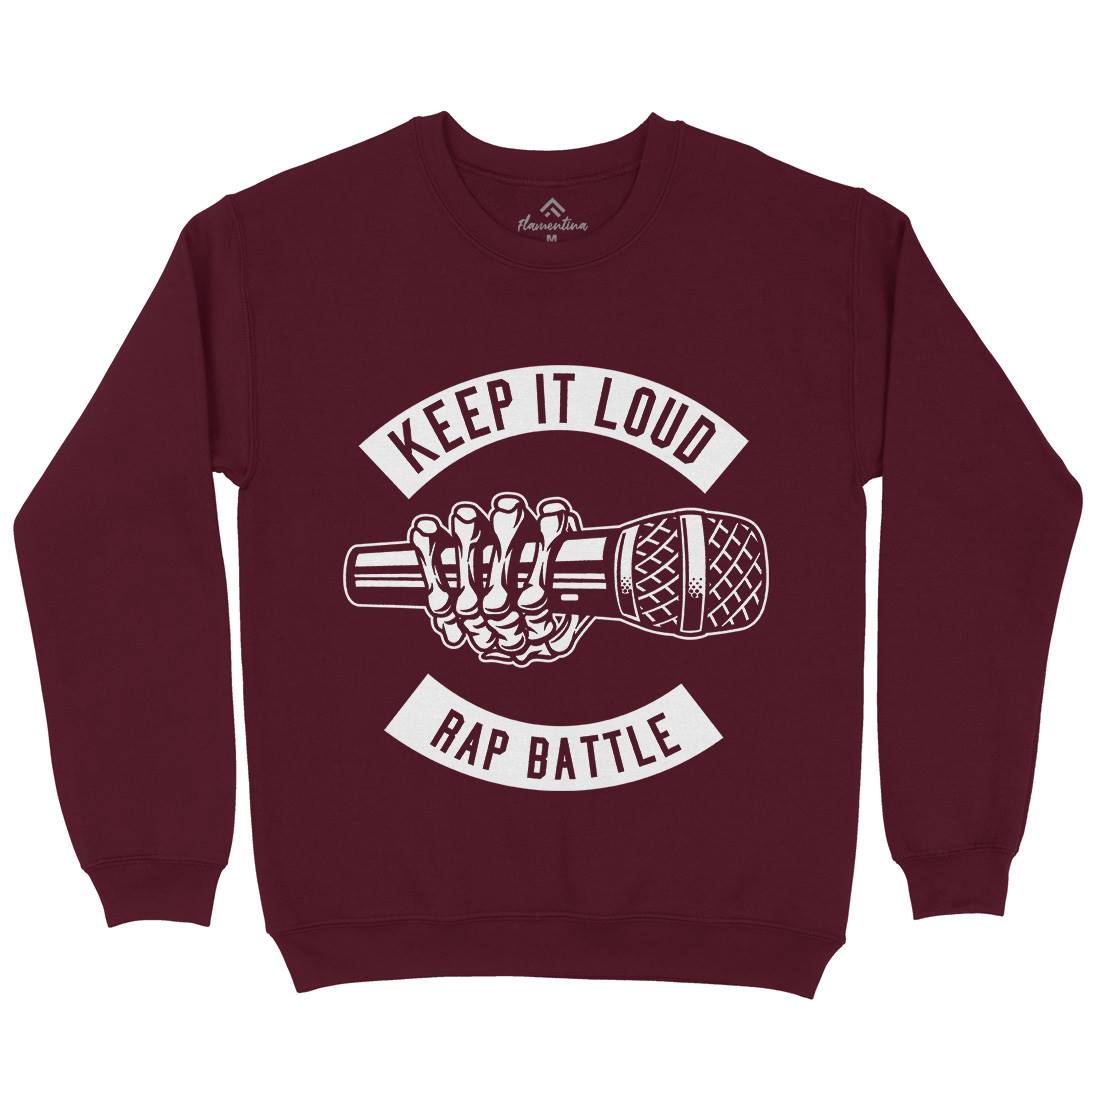 Keep It Loud Mens Crew Neck Sweatshirt Music B568